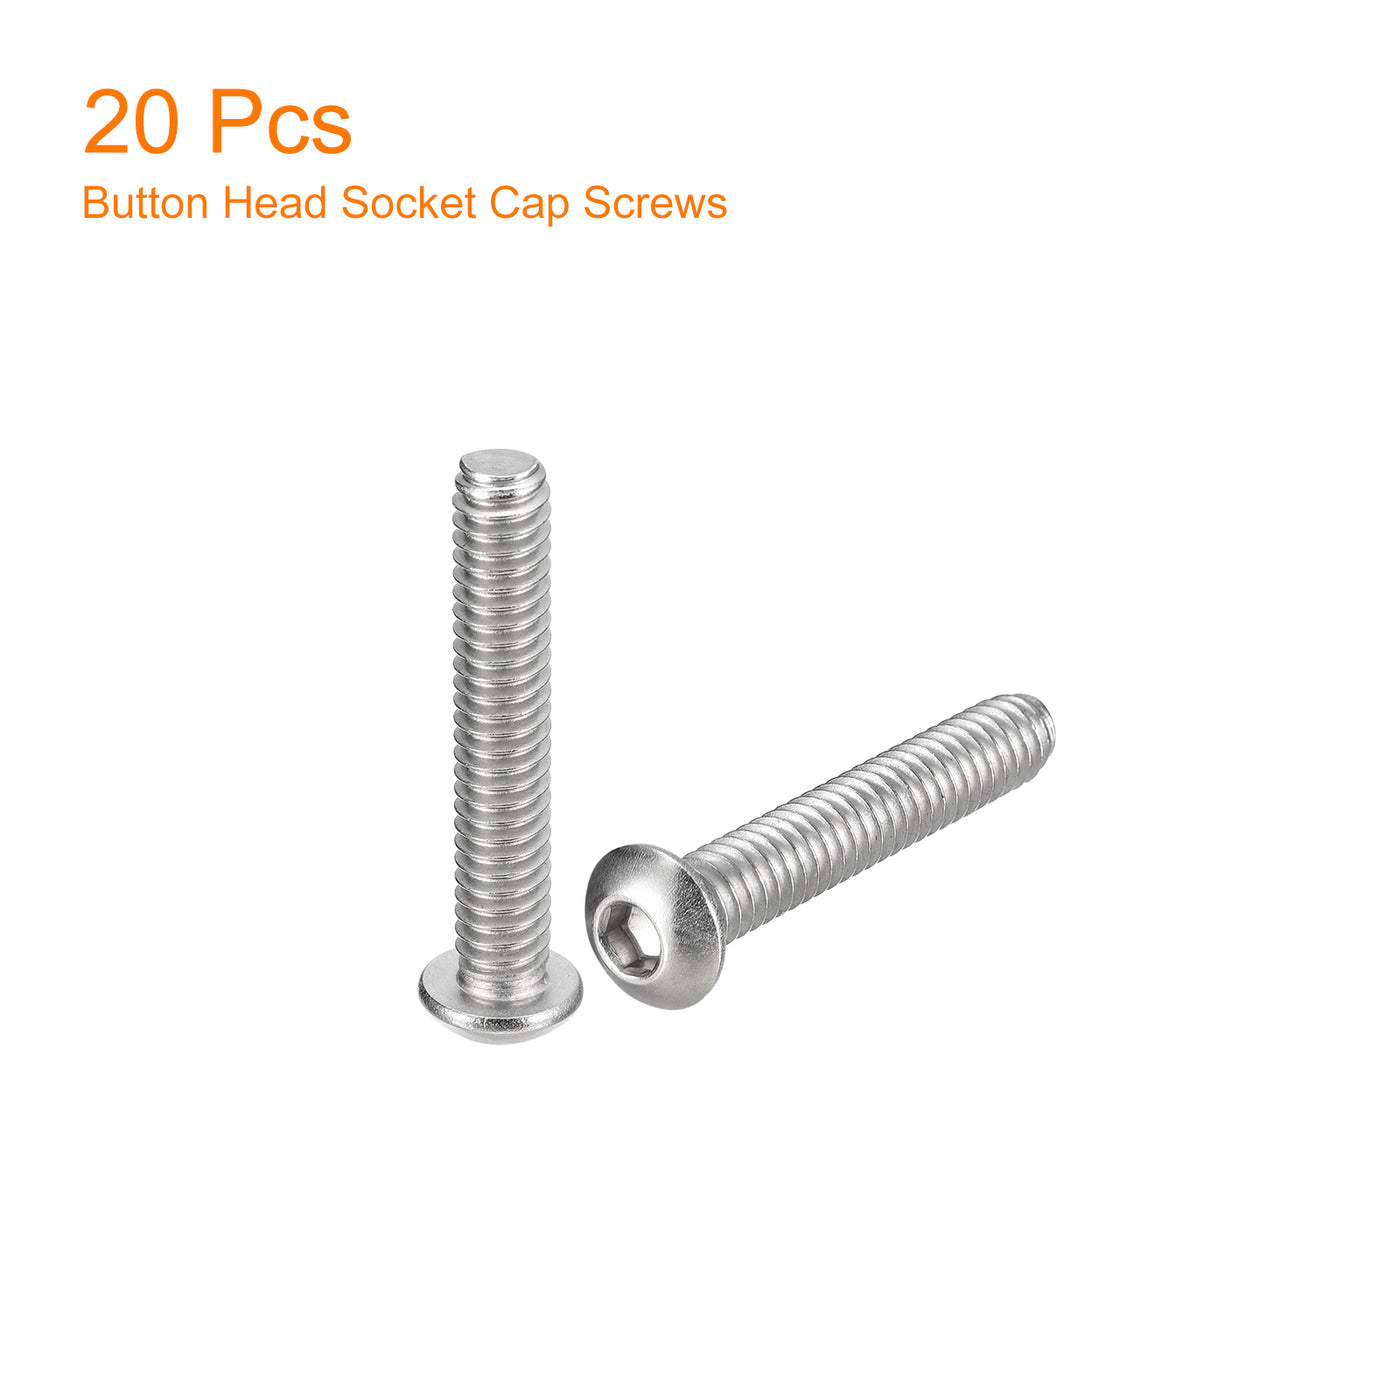 uxcell Uxcell 1/4-20x1-1/2" Button Head Socket Cap Screws, 20pcs 304 Stainless Steel Screws